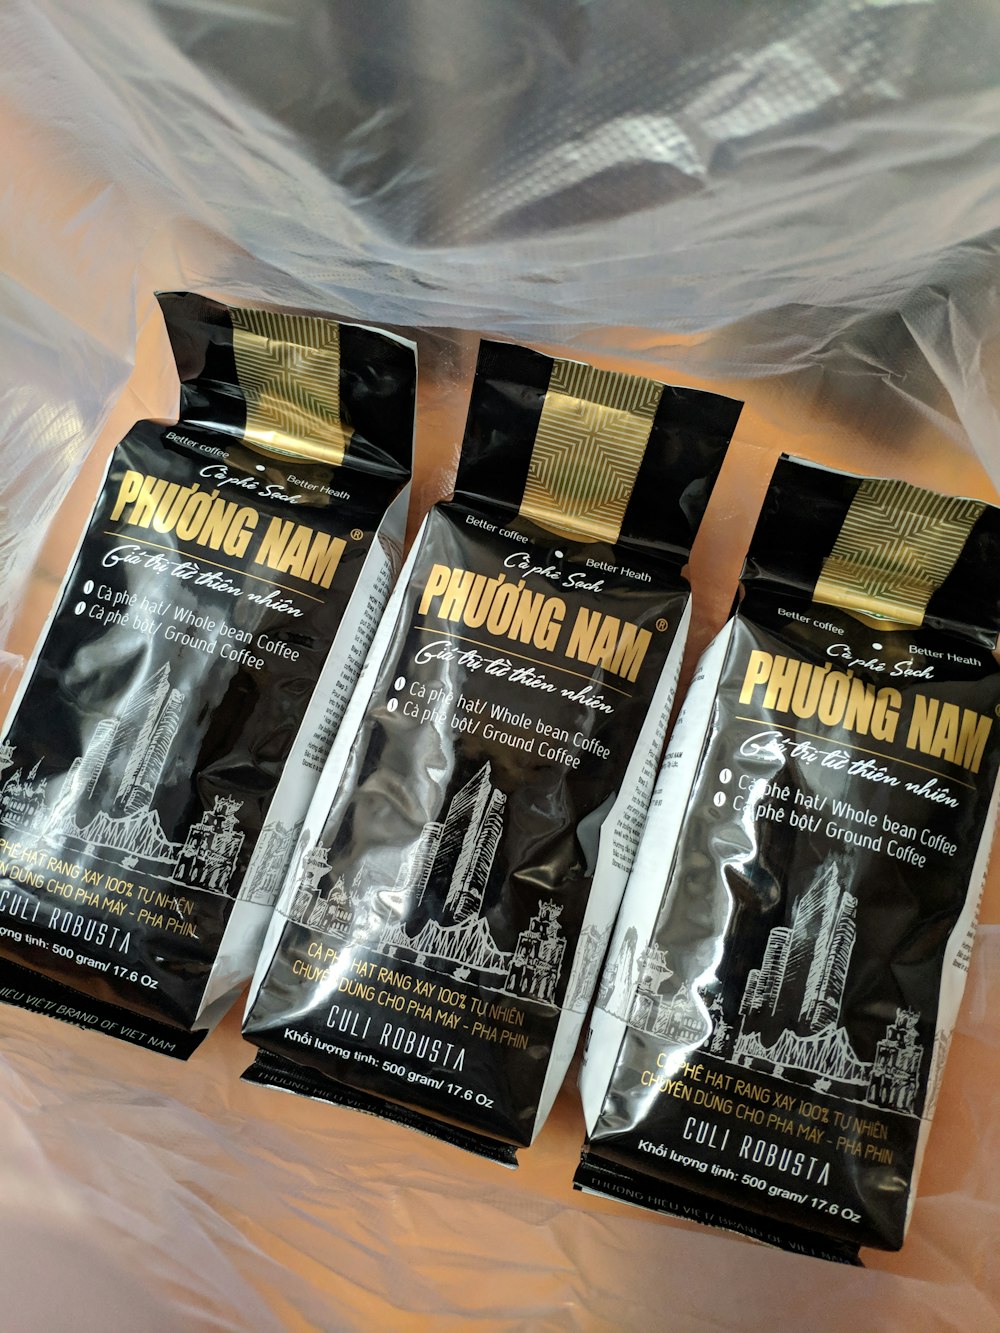 trois packs de Phoung Nam